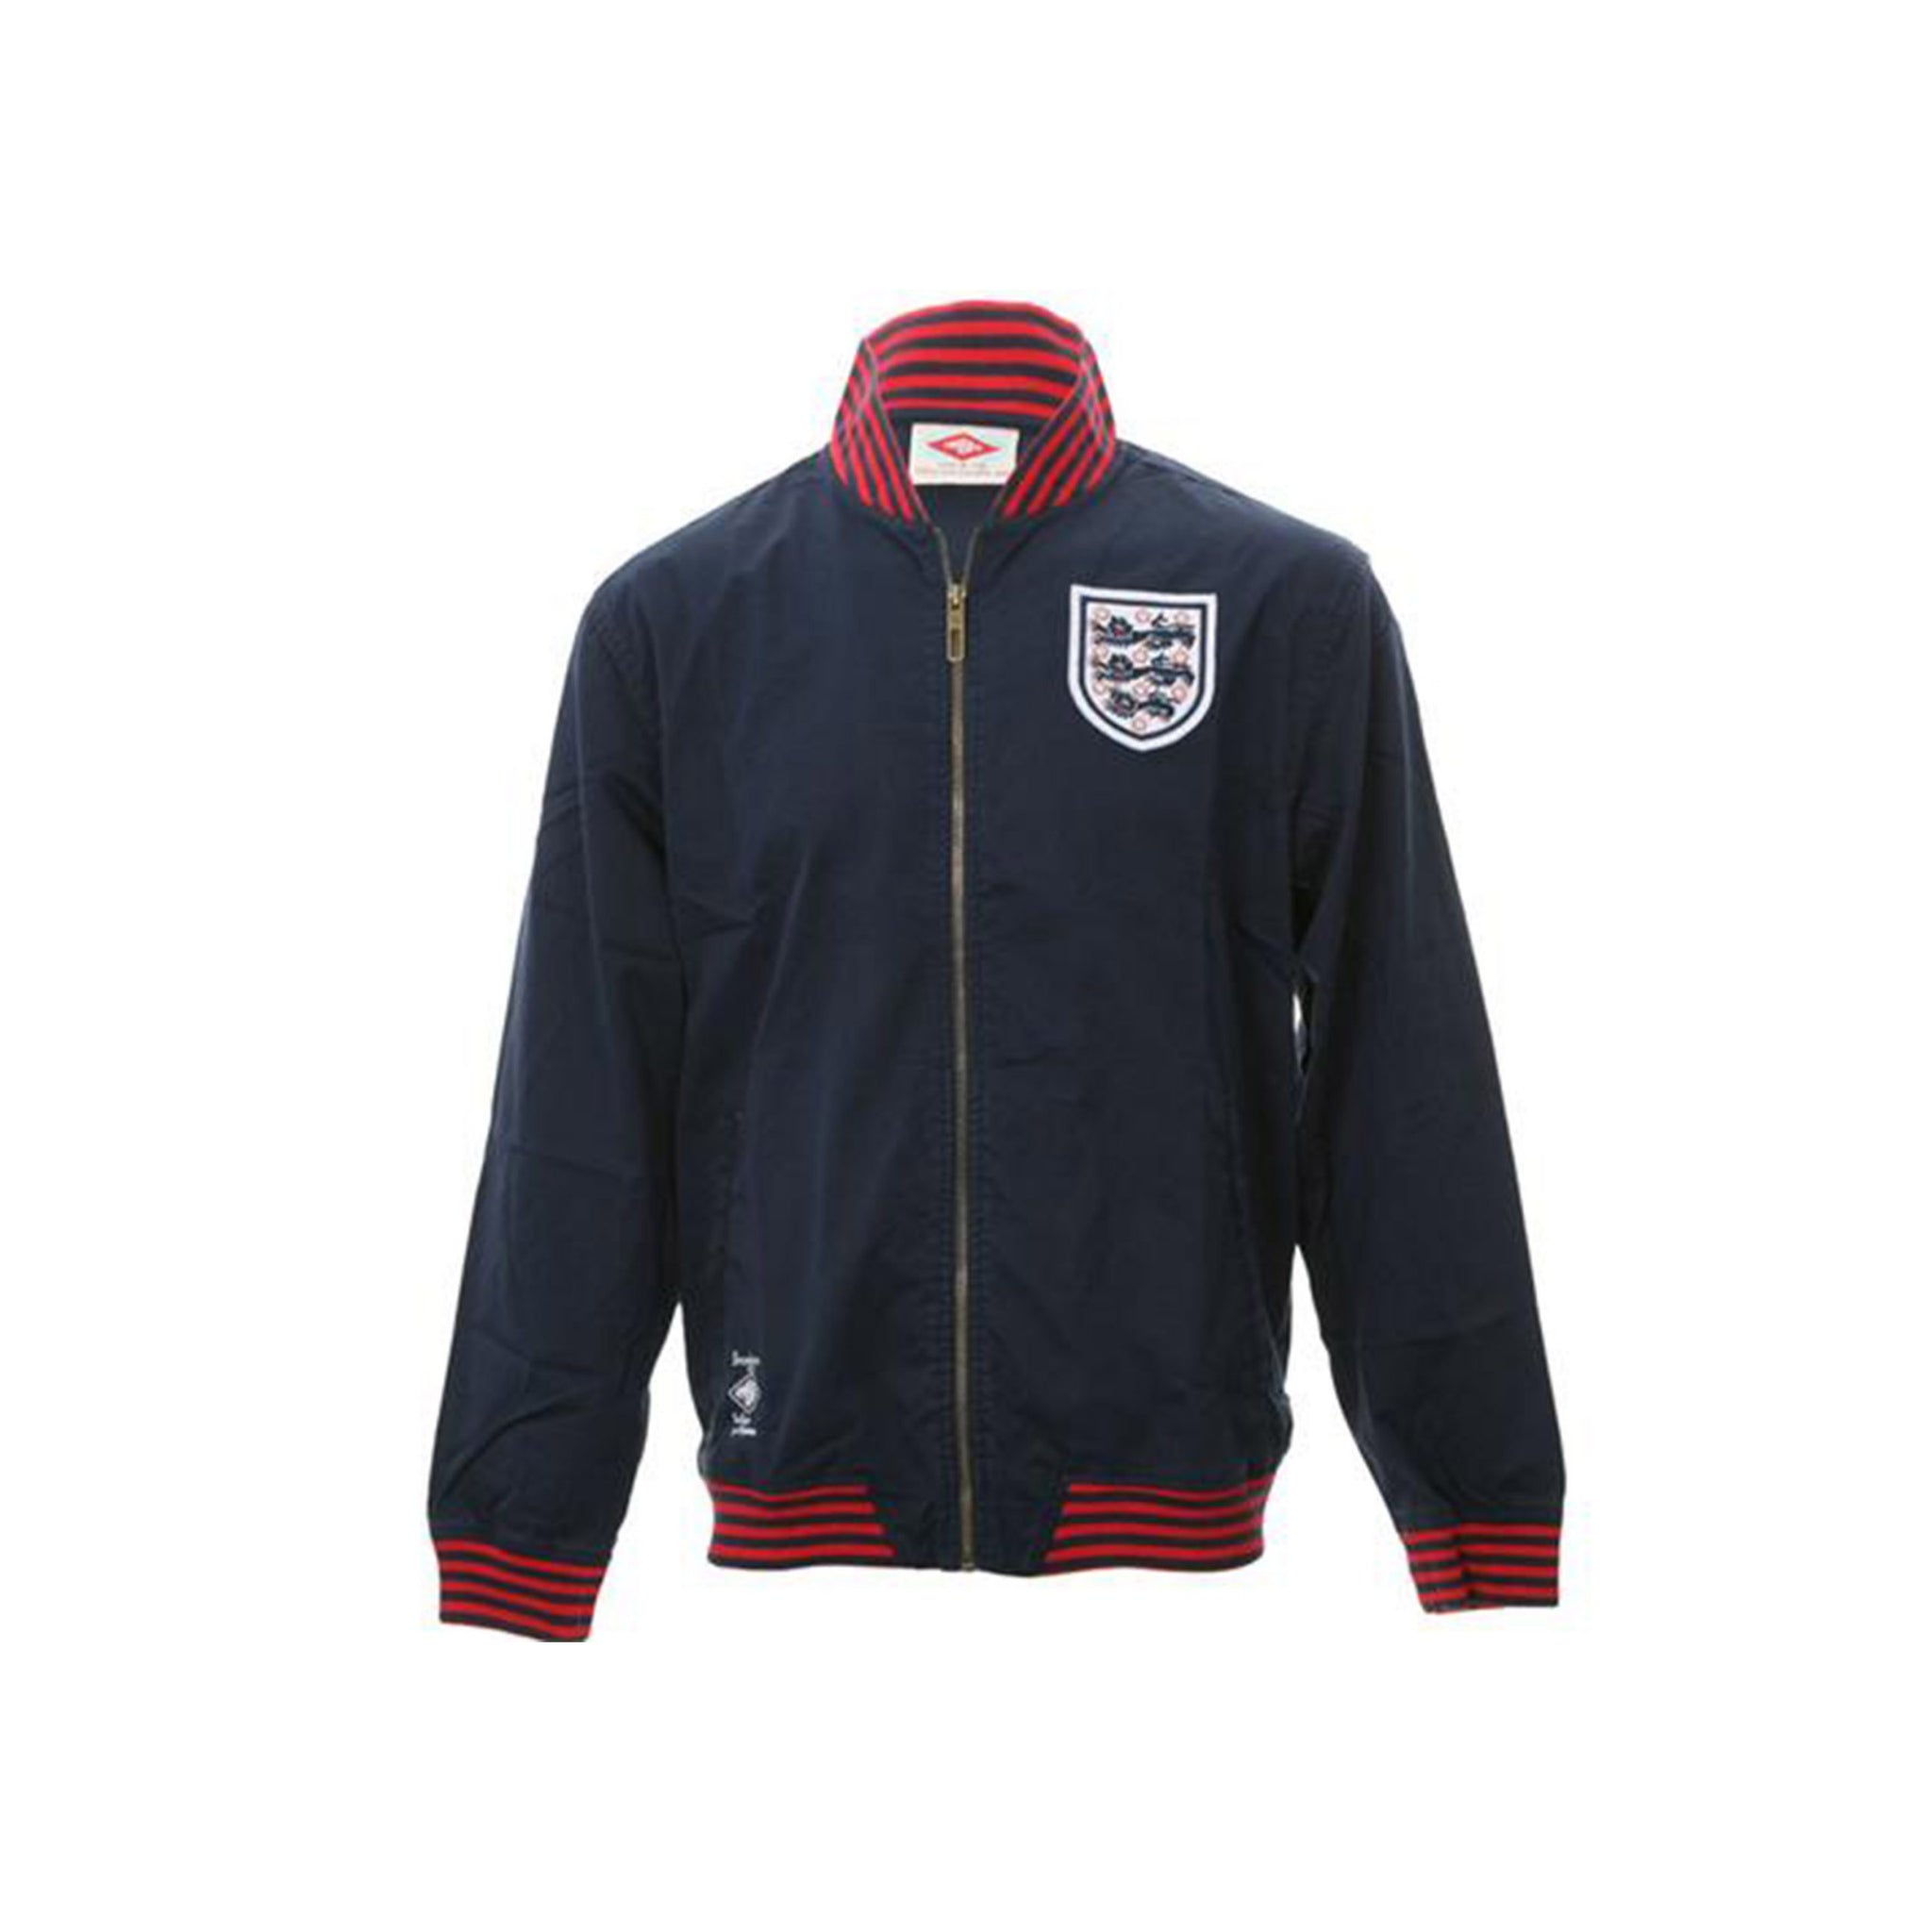 UMBRO England Retro World Cup Jacket 1966